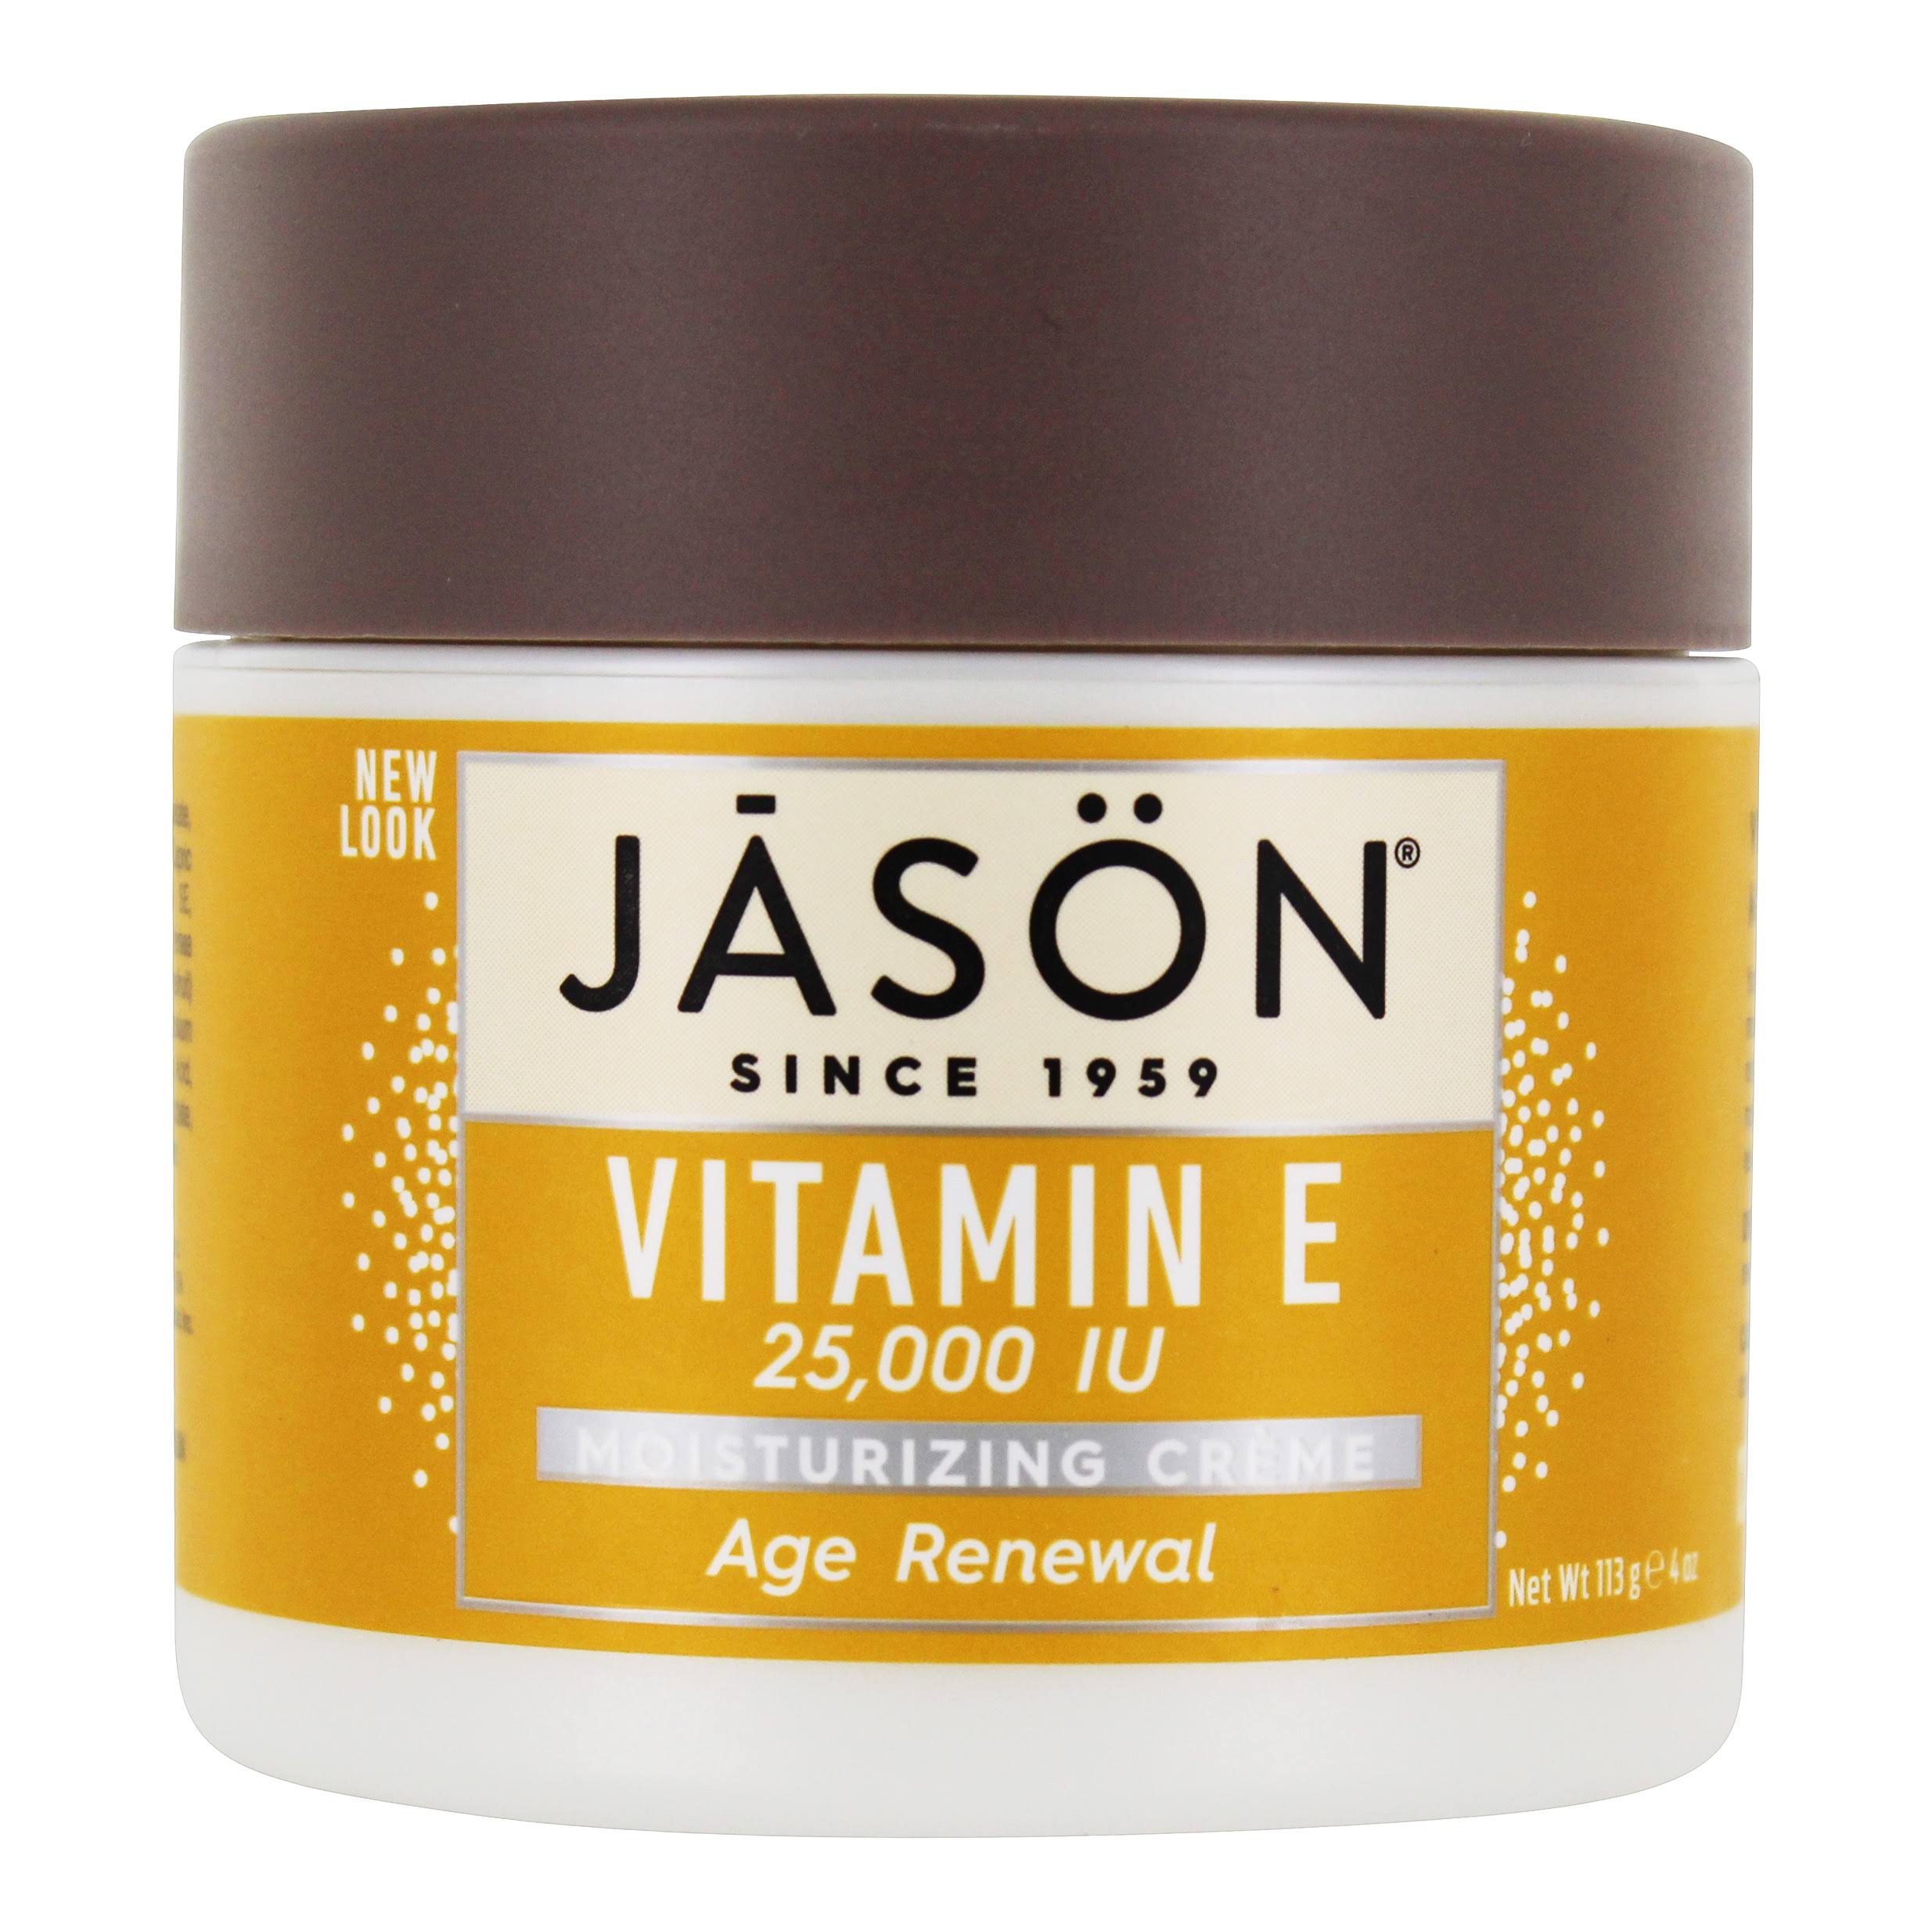 Jason's Age Renewal Vitamin E 25,000 i.U. Moisturizing Creme